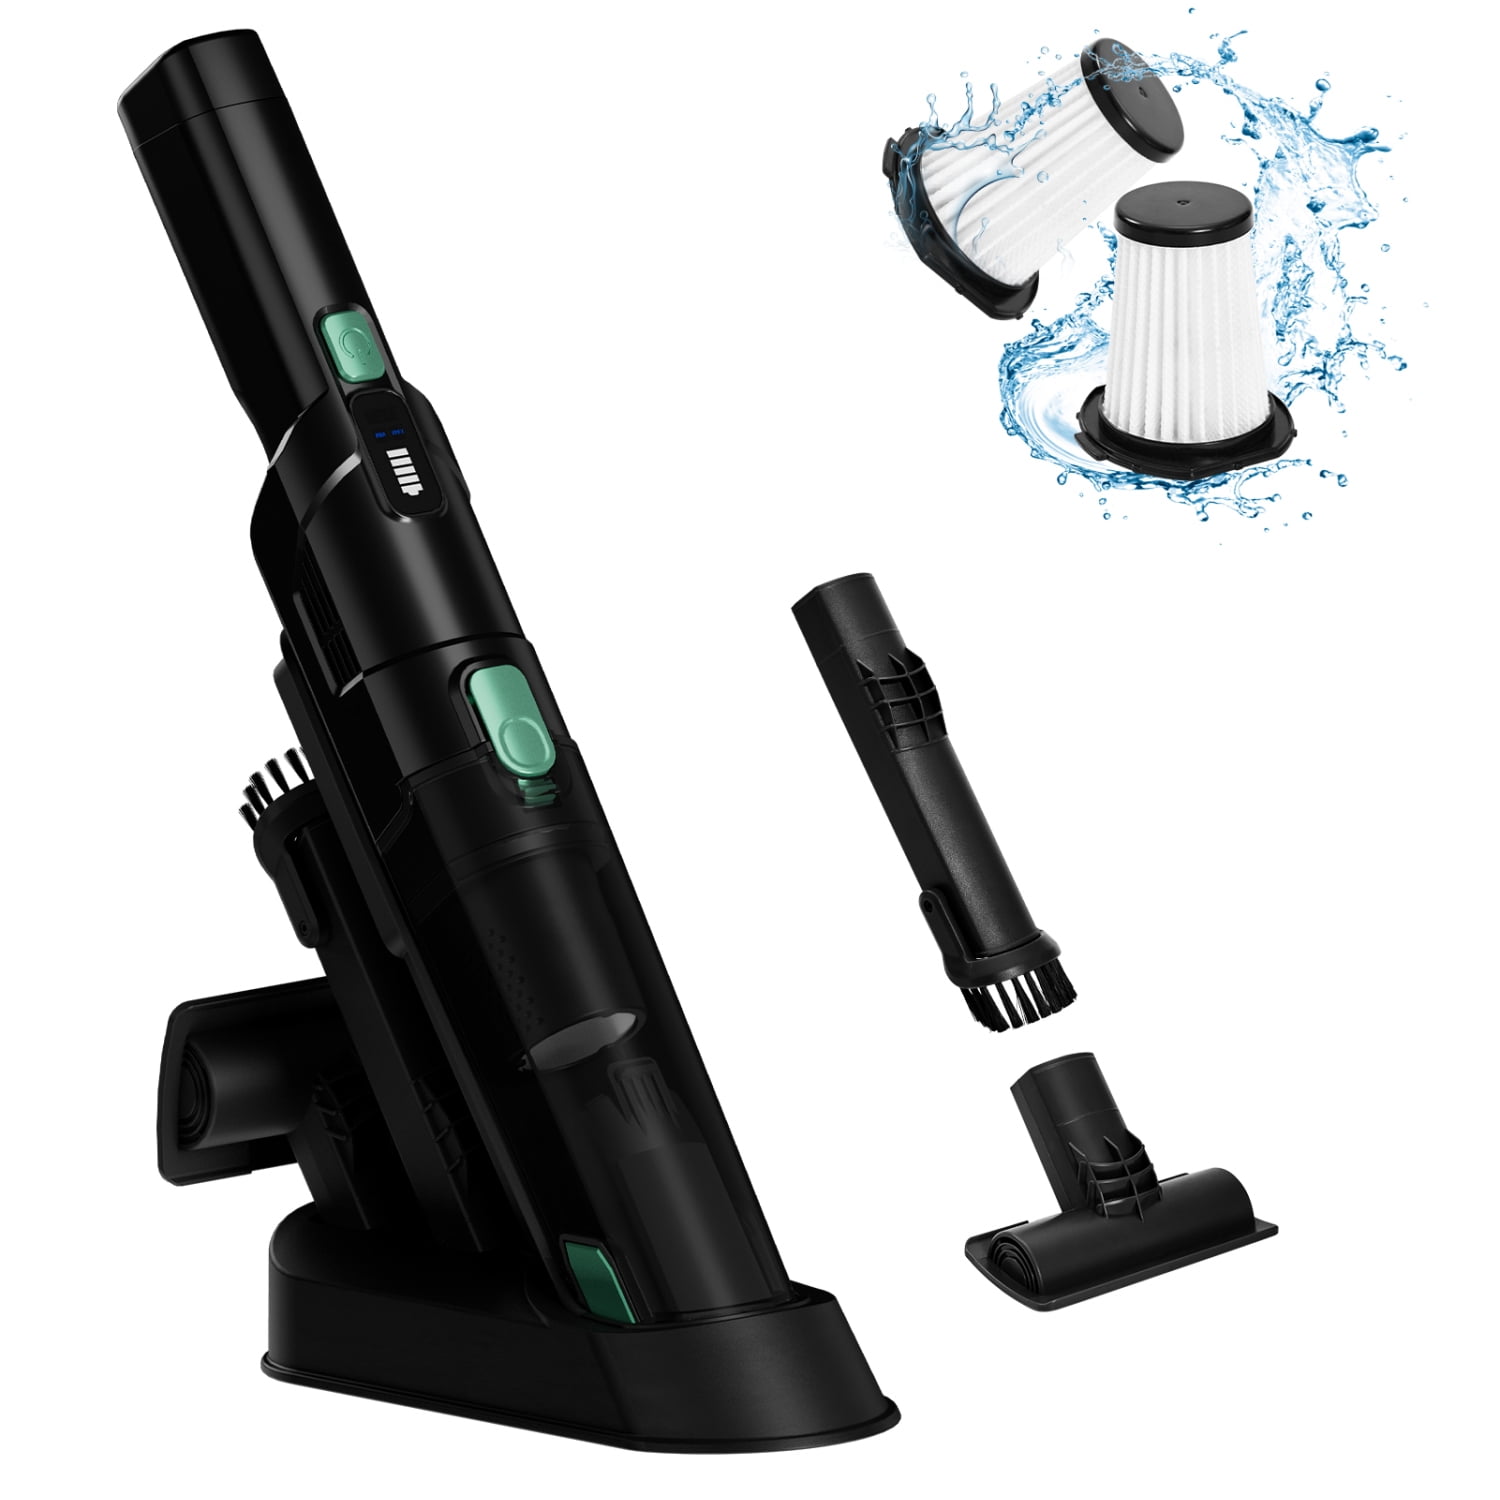 V01 Portable Handheld Car Vacuum Cleaner Wireless Auto Vacuum Cleaner for  Desktop Keyboard Laptops - White / Grey Wholesale